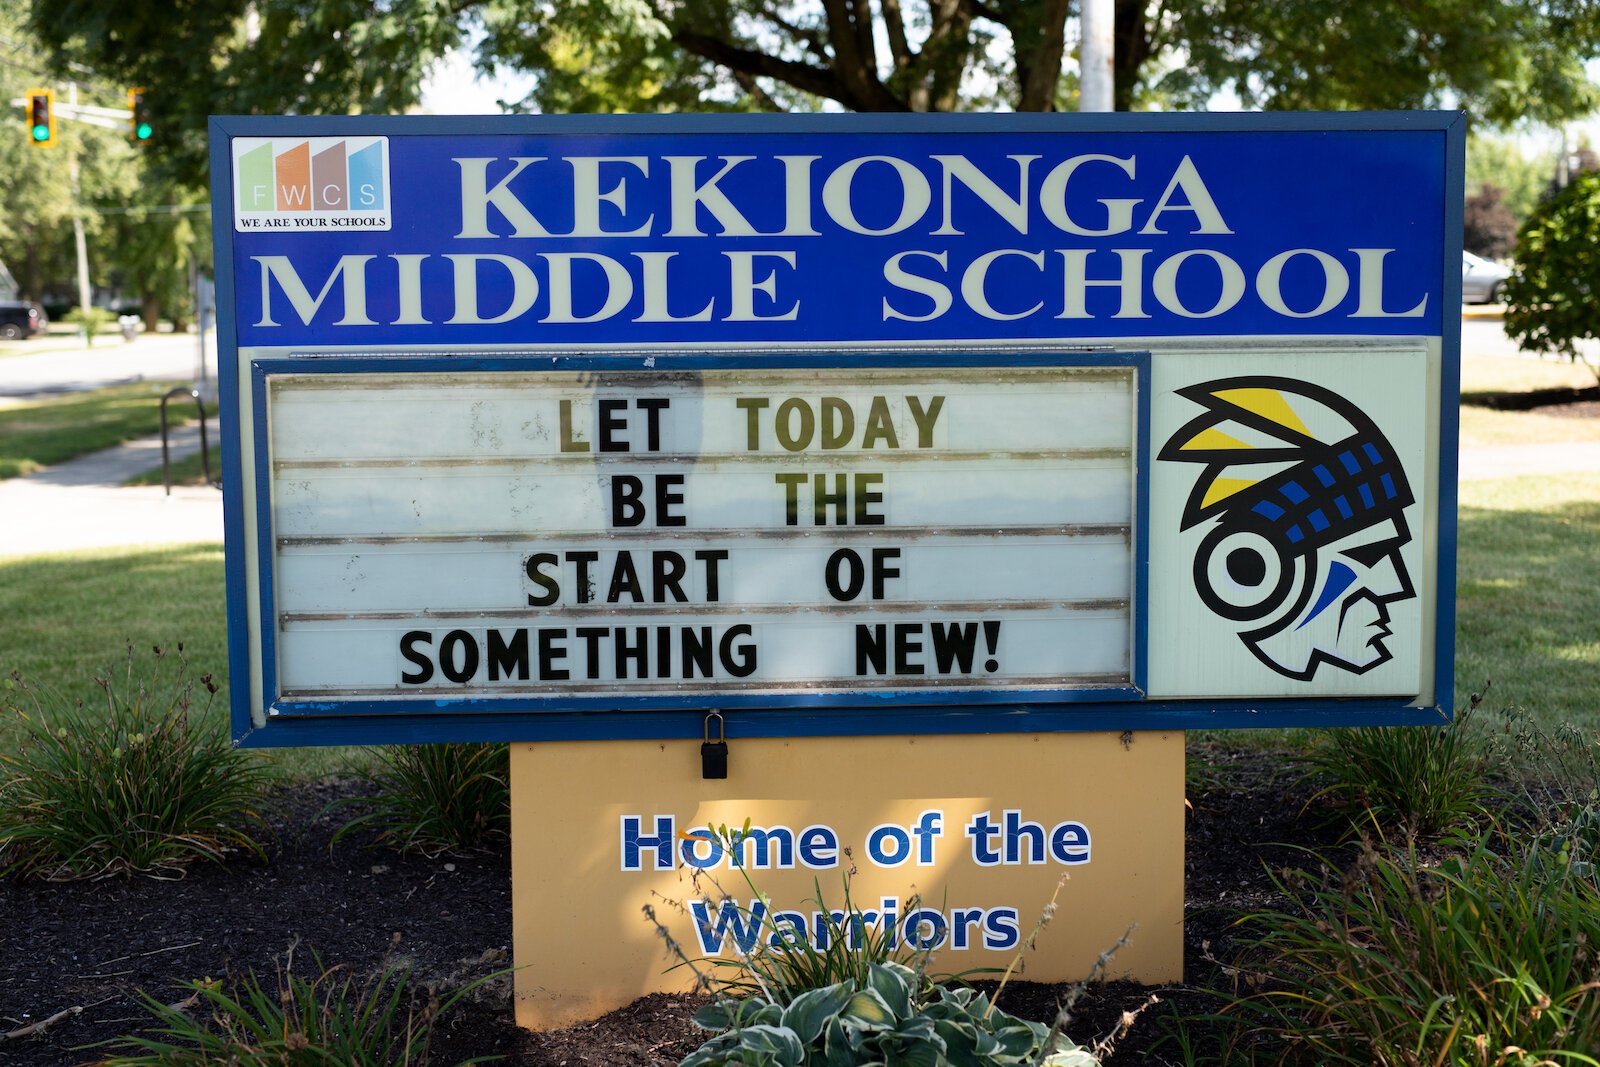 Kekionga Middle School offers English Language Learner programs.